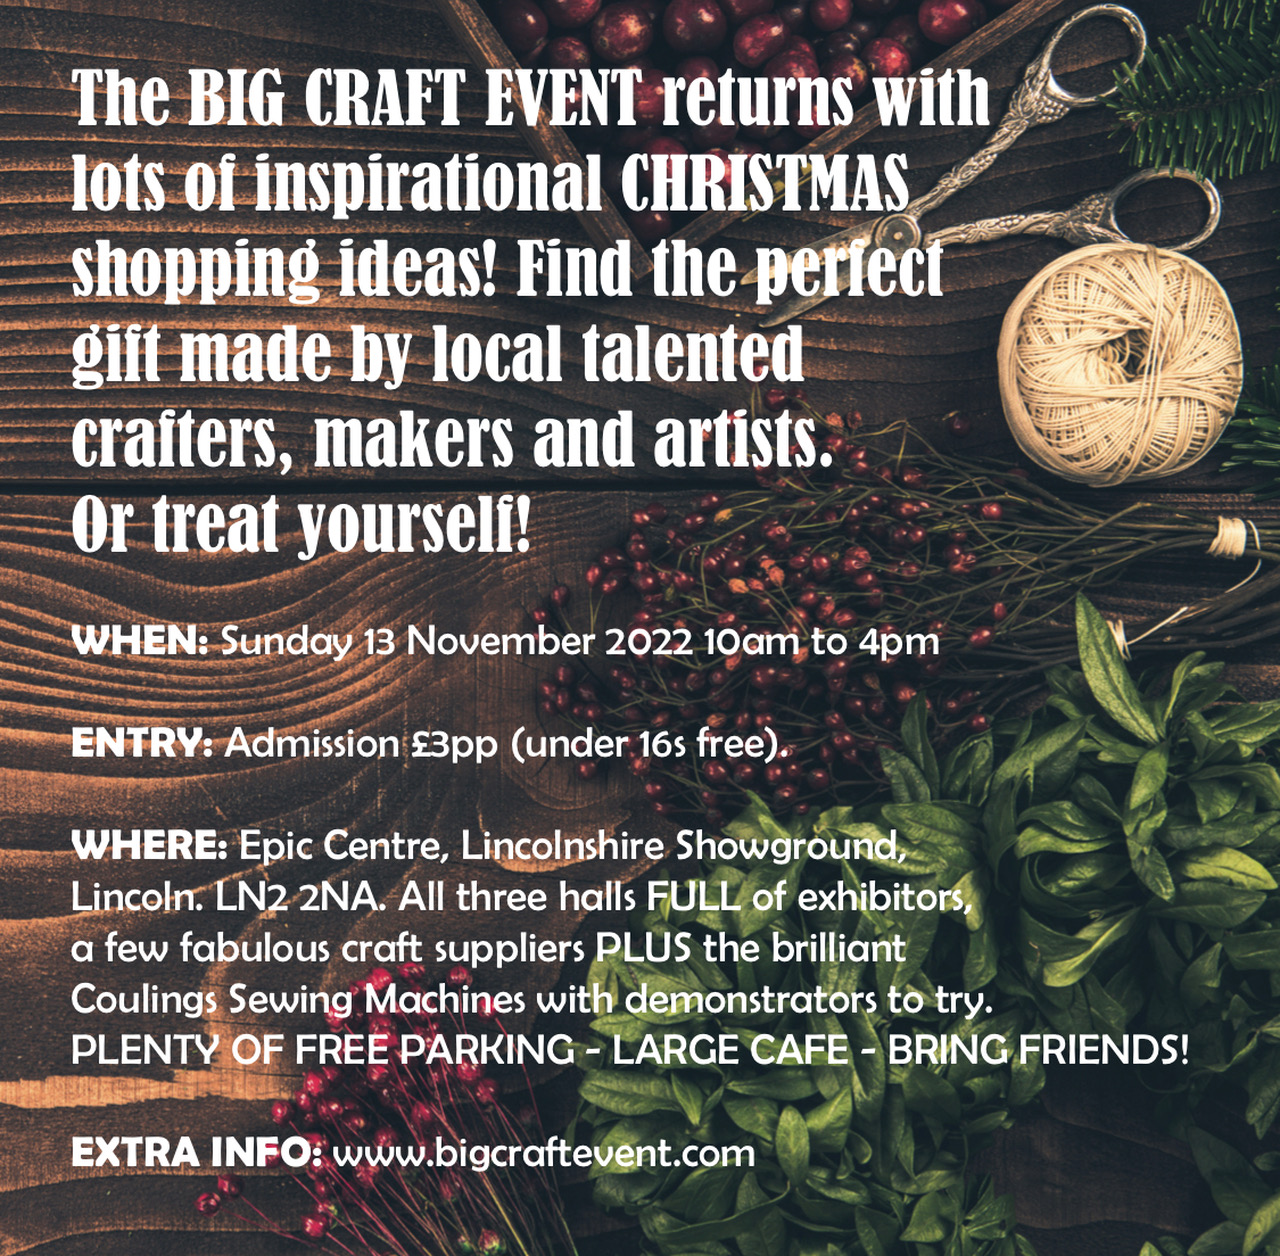 The Big Craft Event